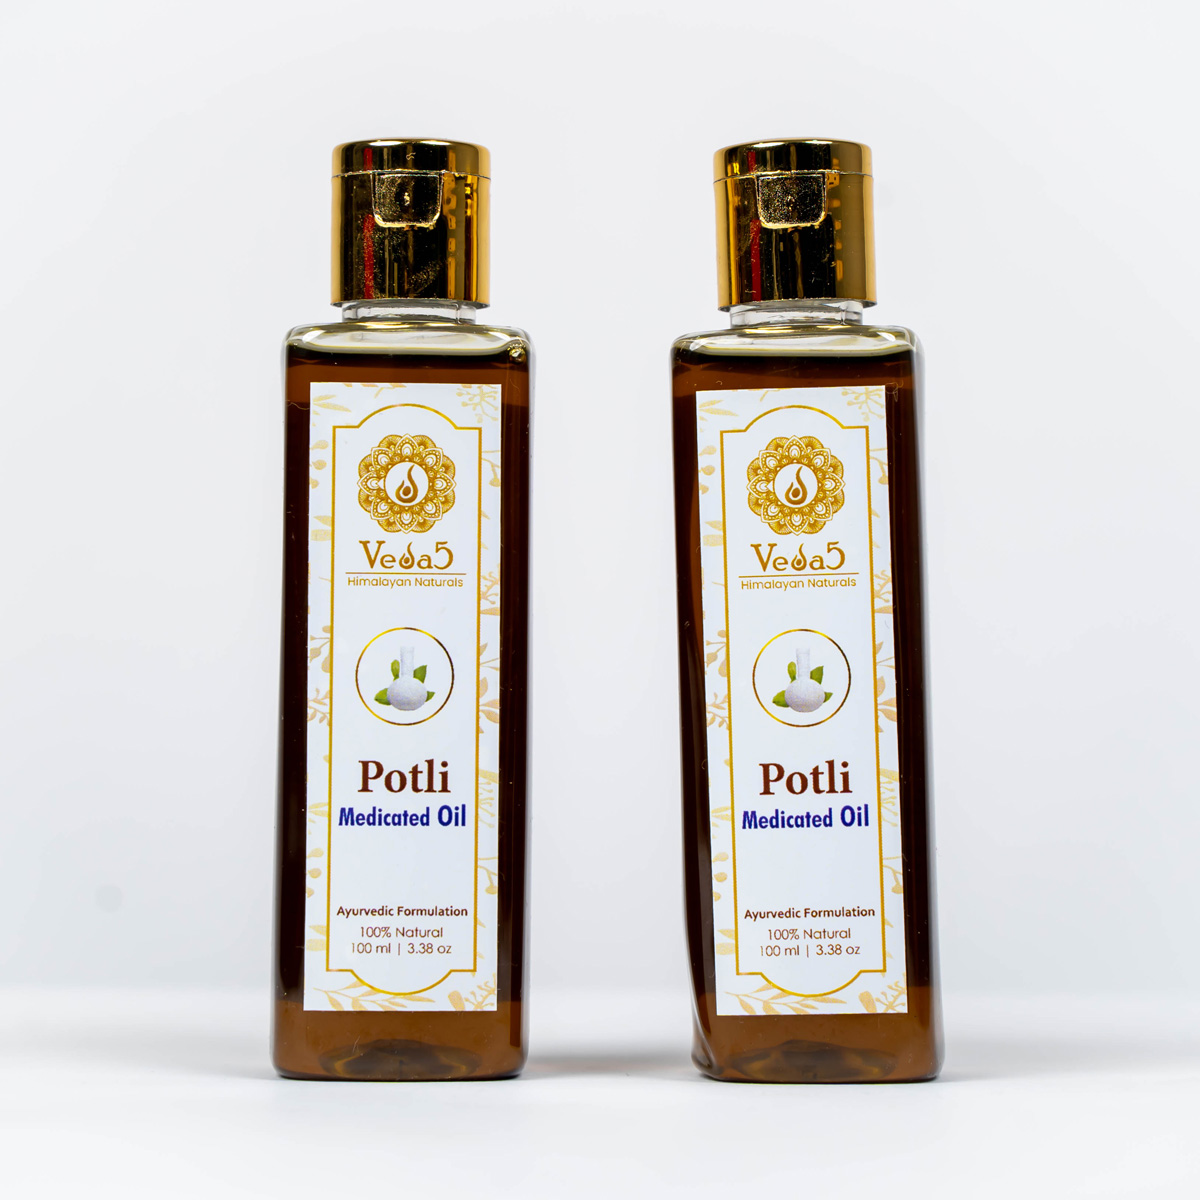 Veda5 Ayurvedic Self Use Potli Kit Pain Relief Oil Medicated Oil 2 Potlis Herbal Compress 5